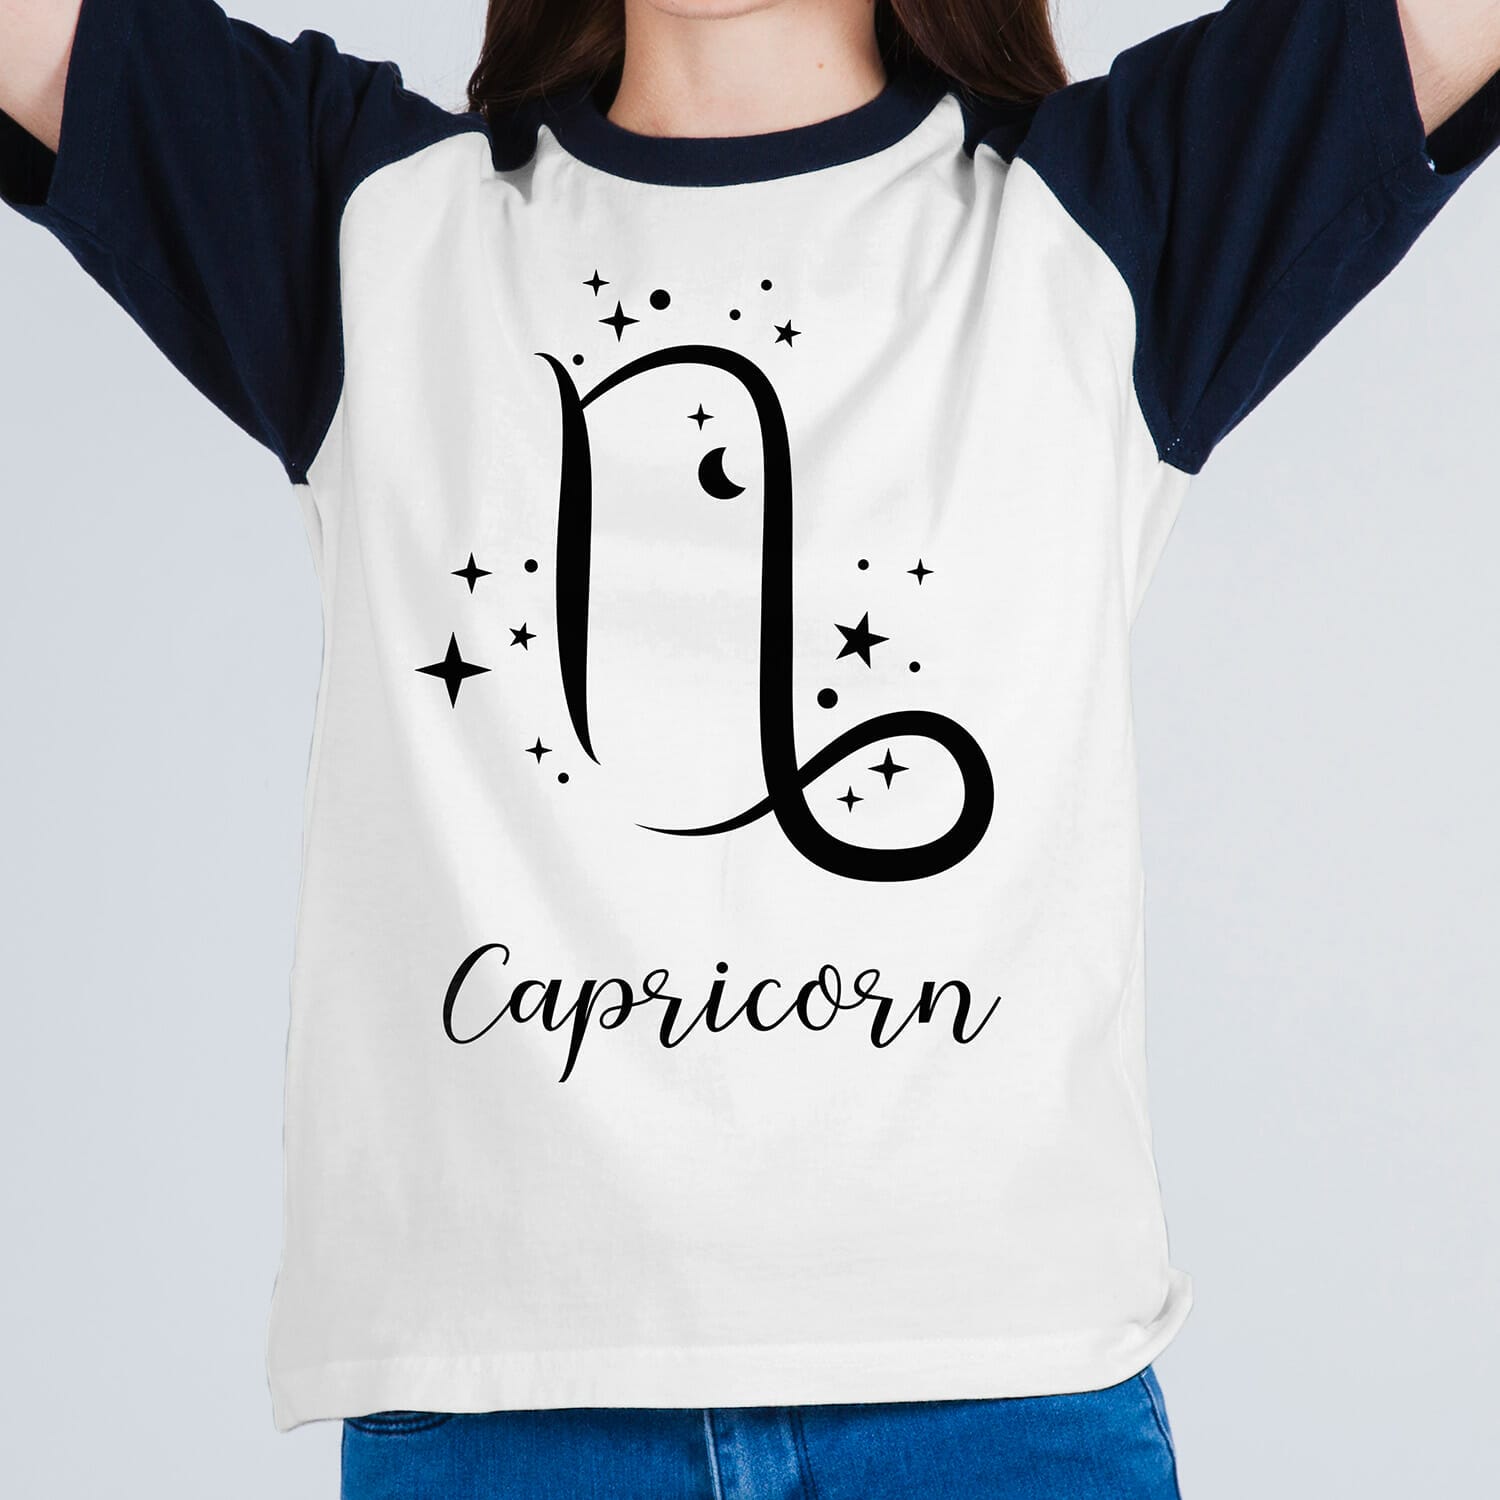 Capricorn Horoscope Tshirt Design